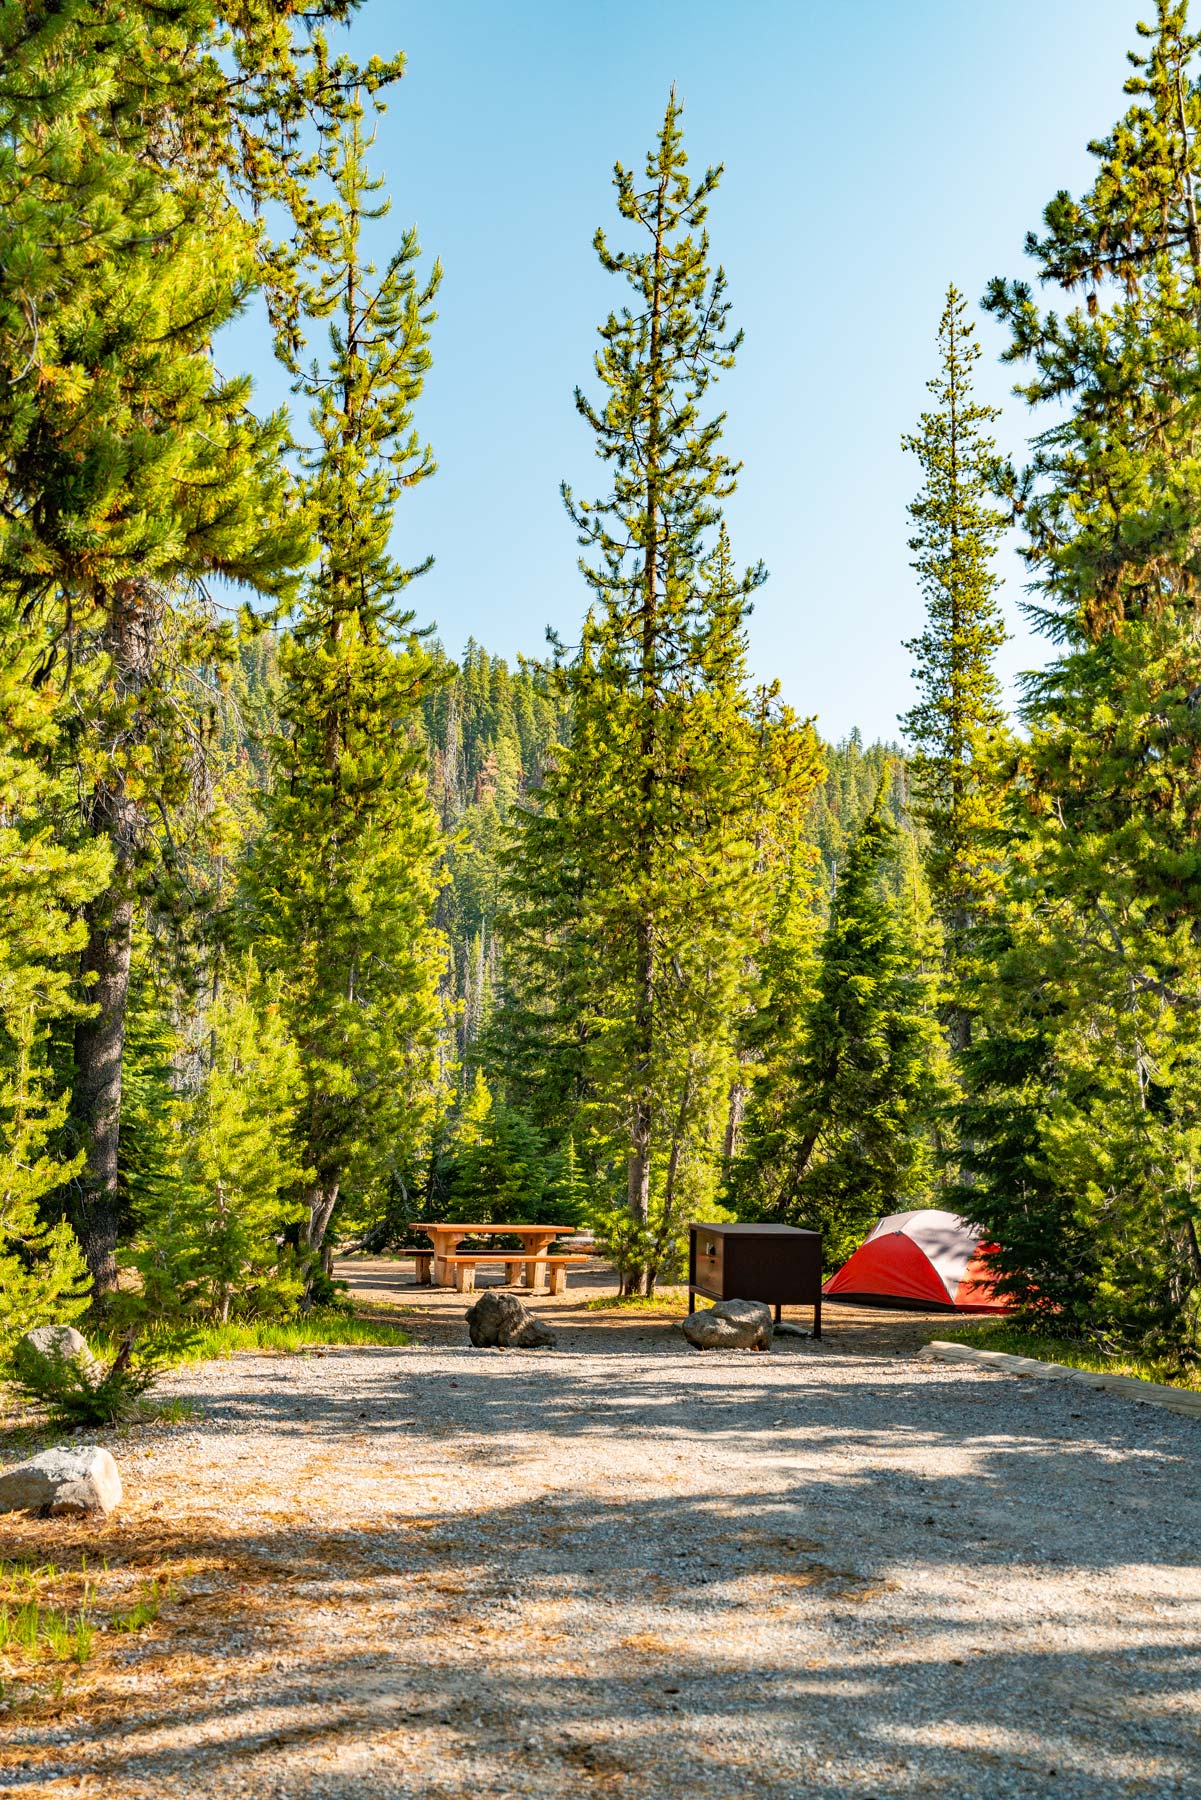 mazama campground at crater lake national park